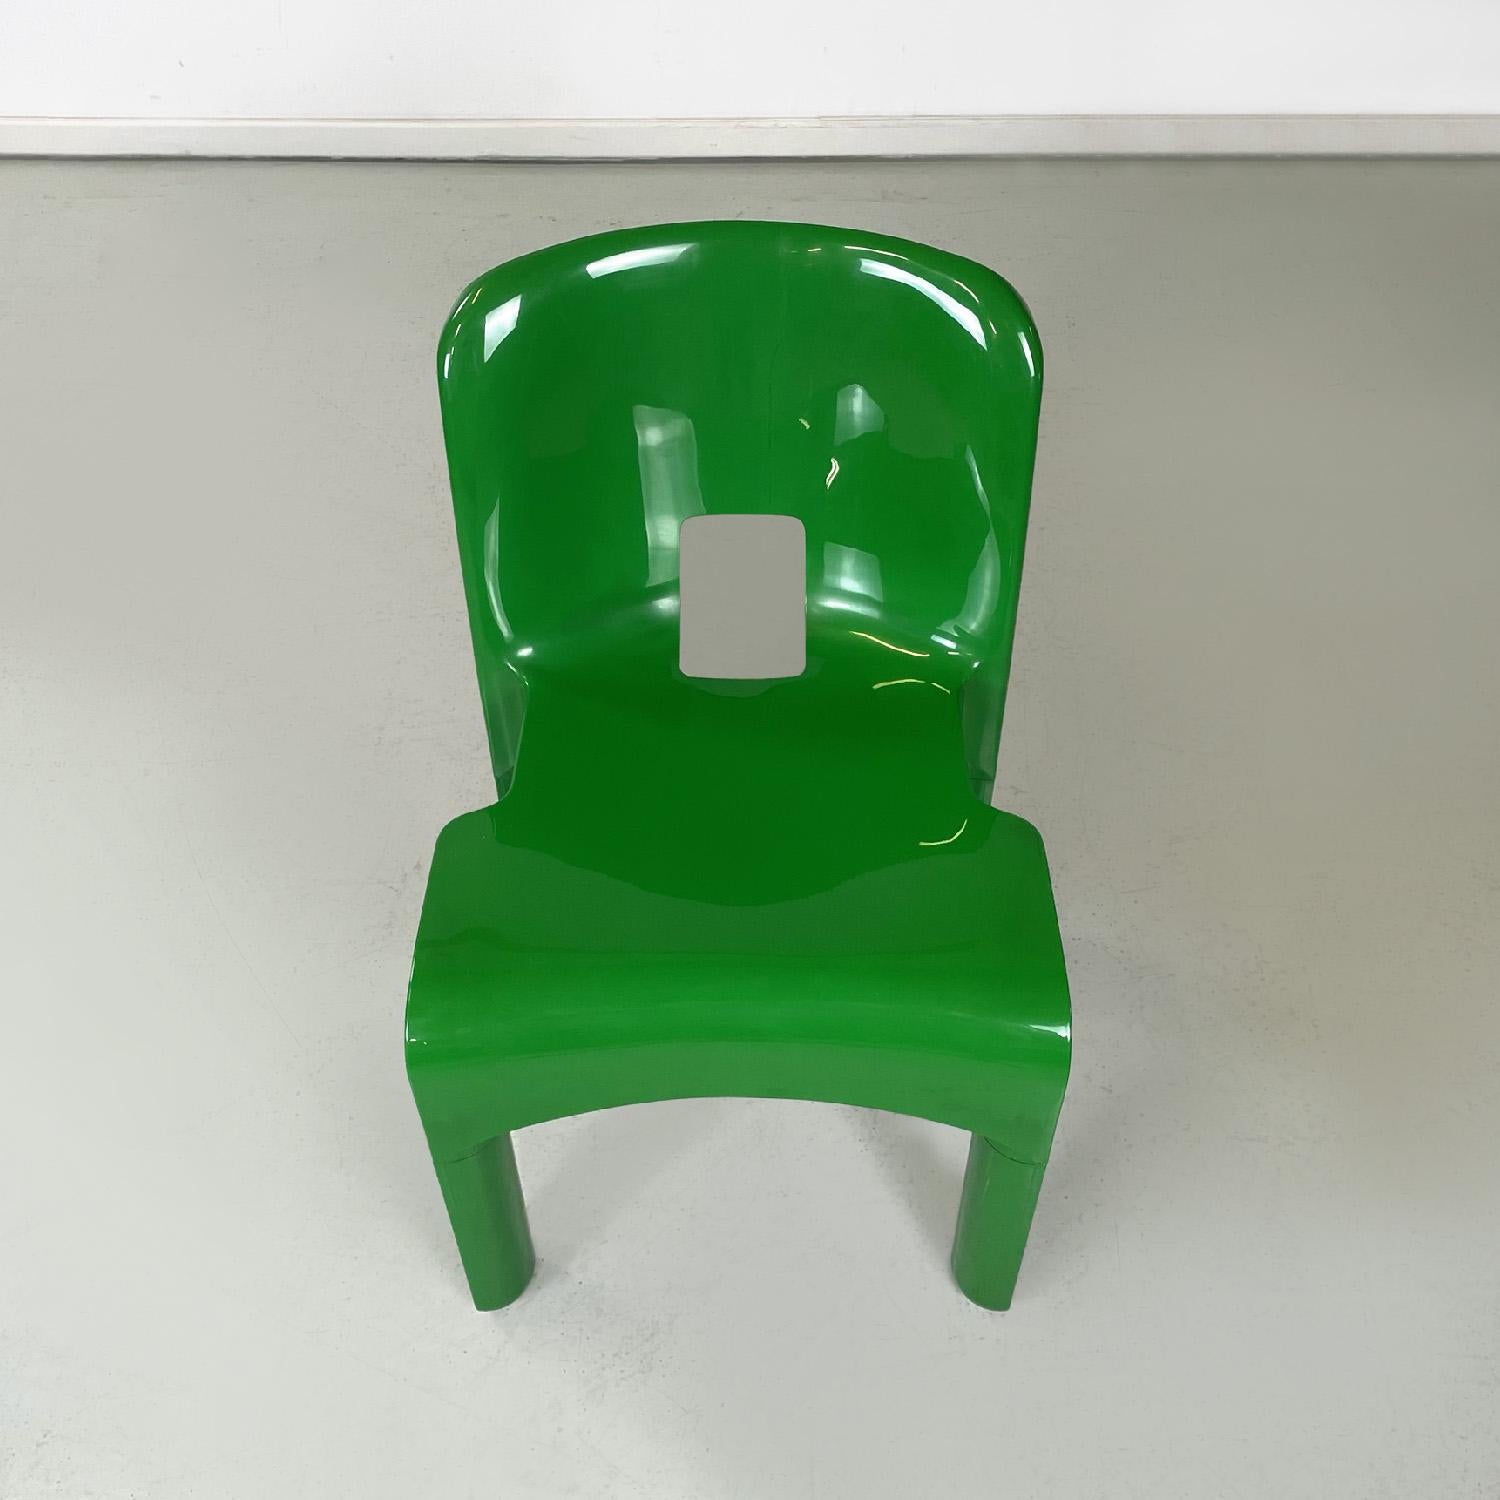 Plastic Italian modern green Chairs 4868 Universal Chair by Joe Colombo Kartell, 1970s For Sale